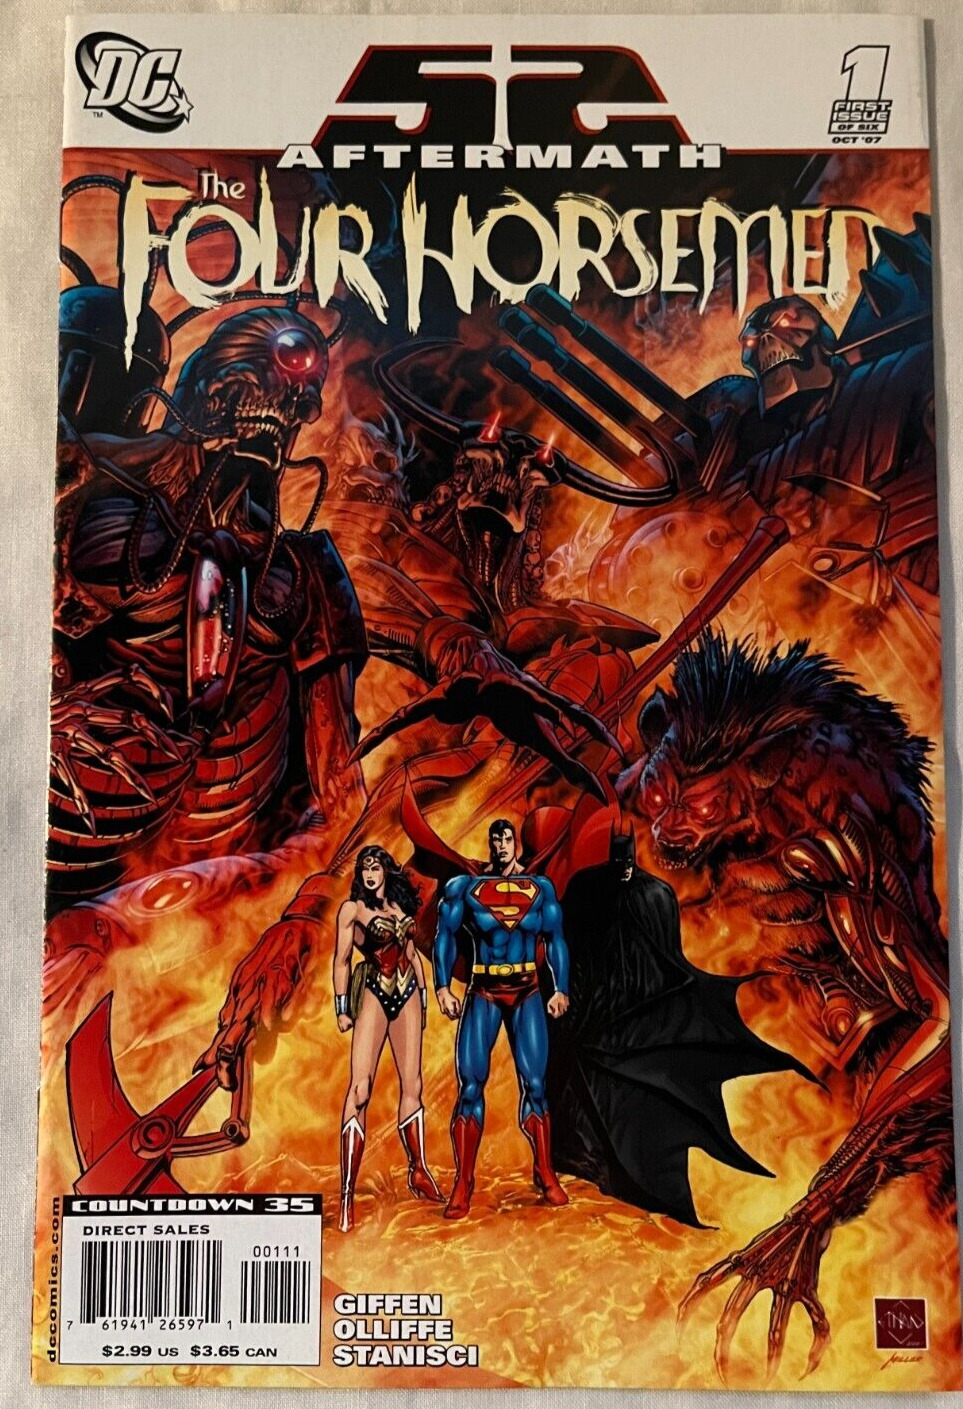 2008 DC Comics Countdown 52 Aftermath The Four Horsemen #1 VF+